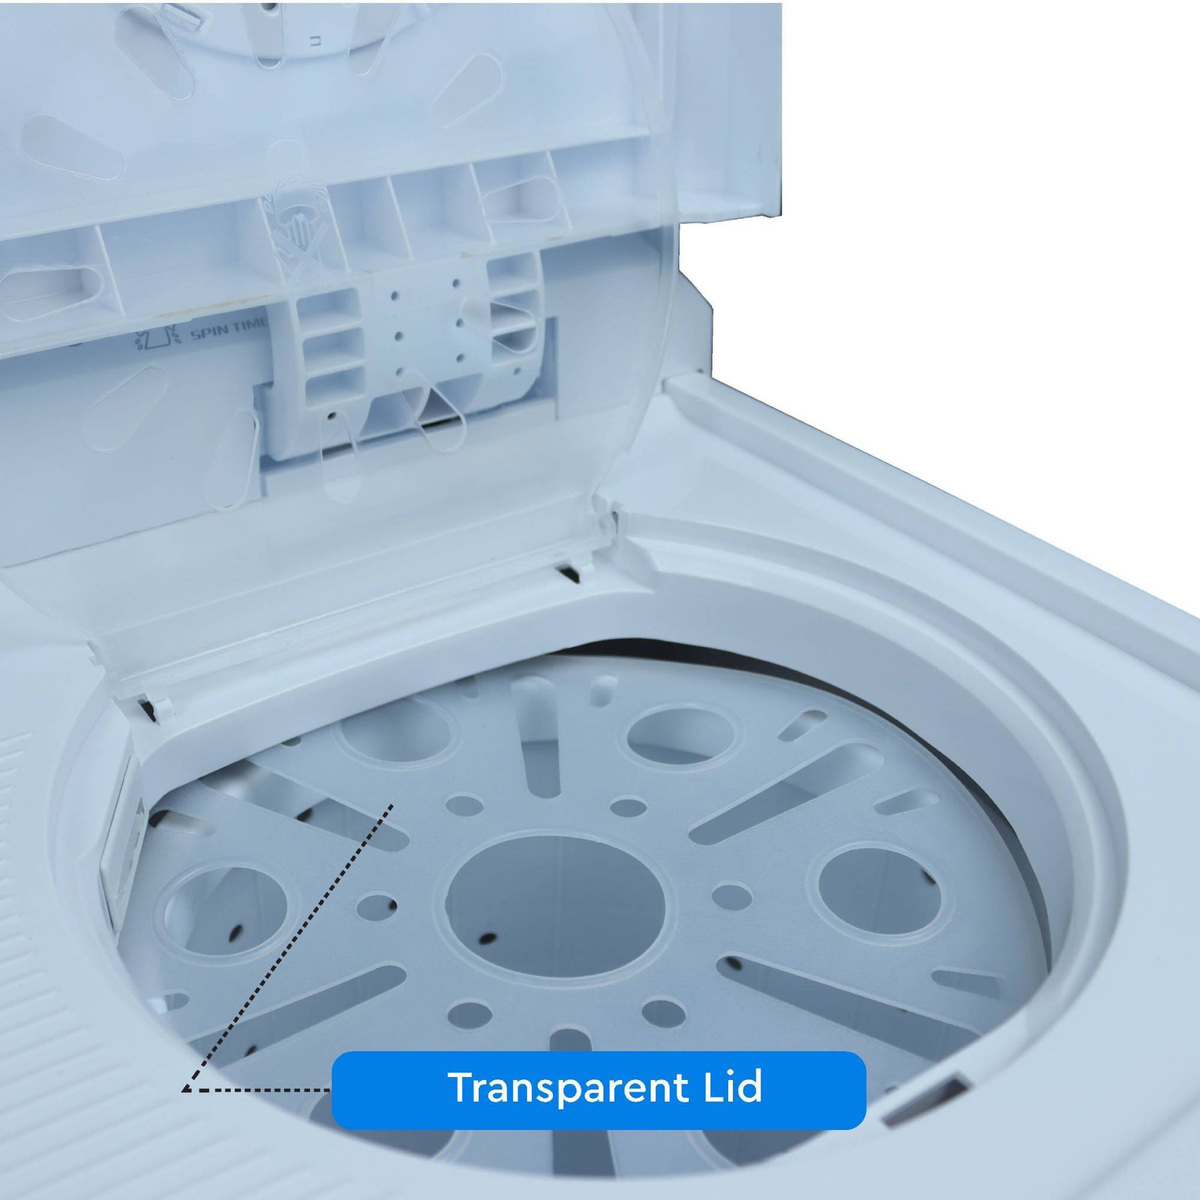 Nobel Twin Tub Top Load Washing Machine NWM8001 7KG